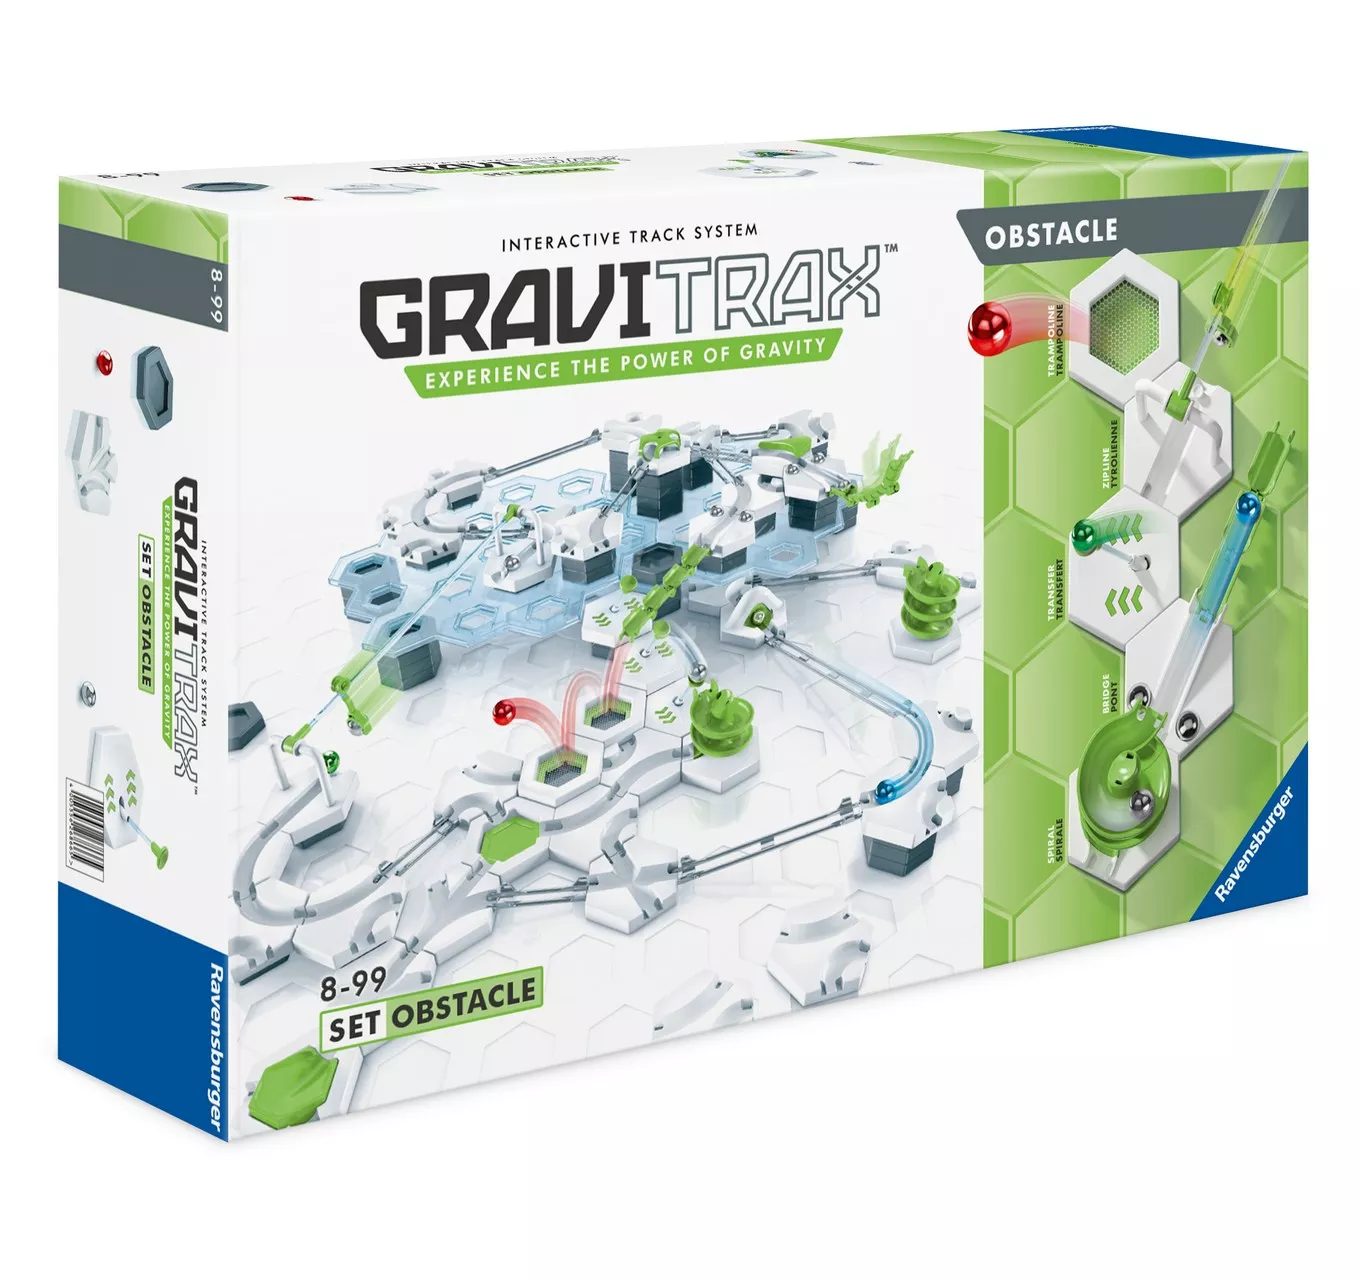 Gravitrax Obstacle Starter Set